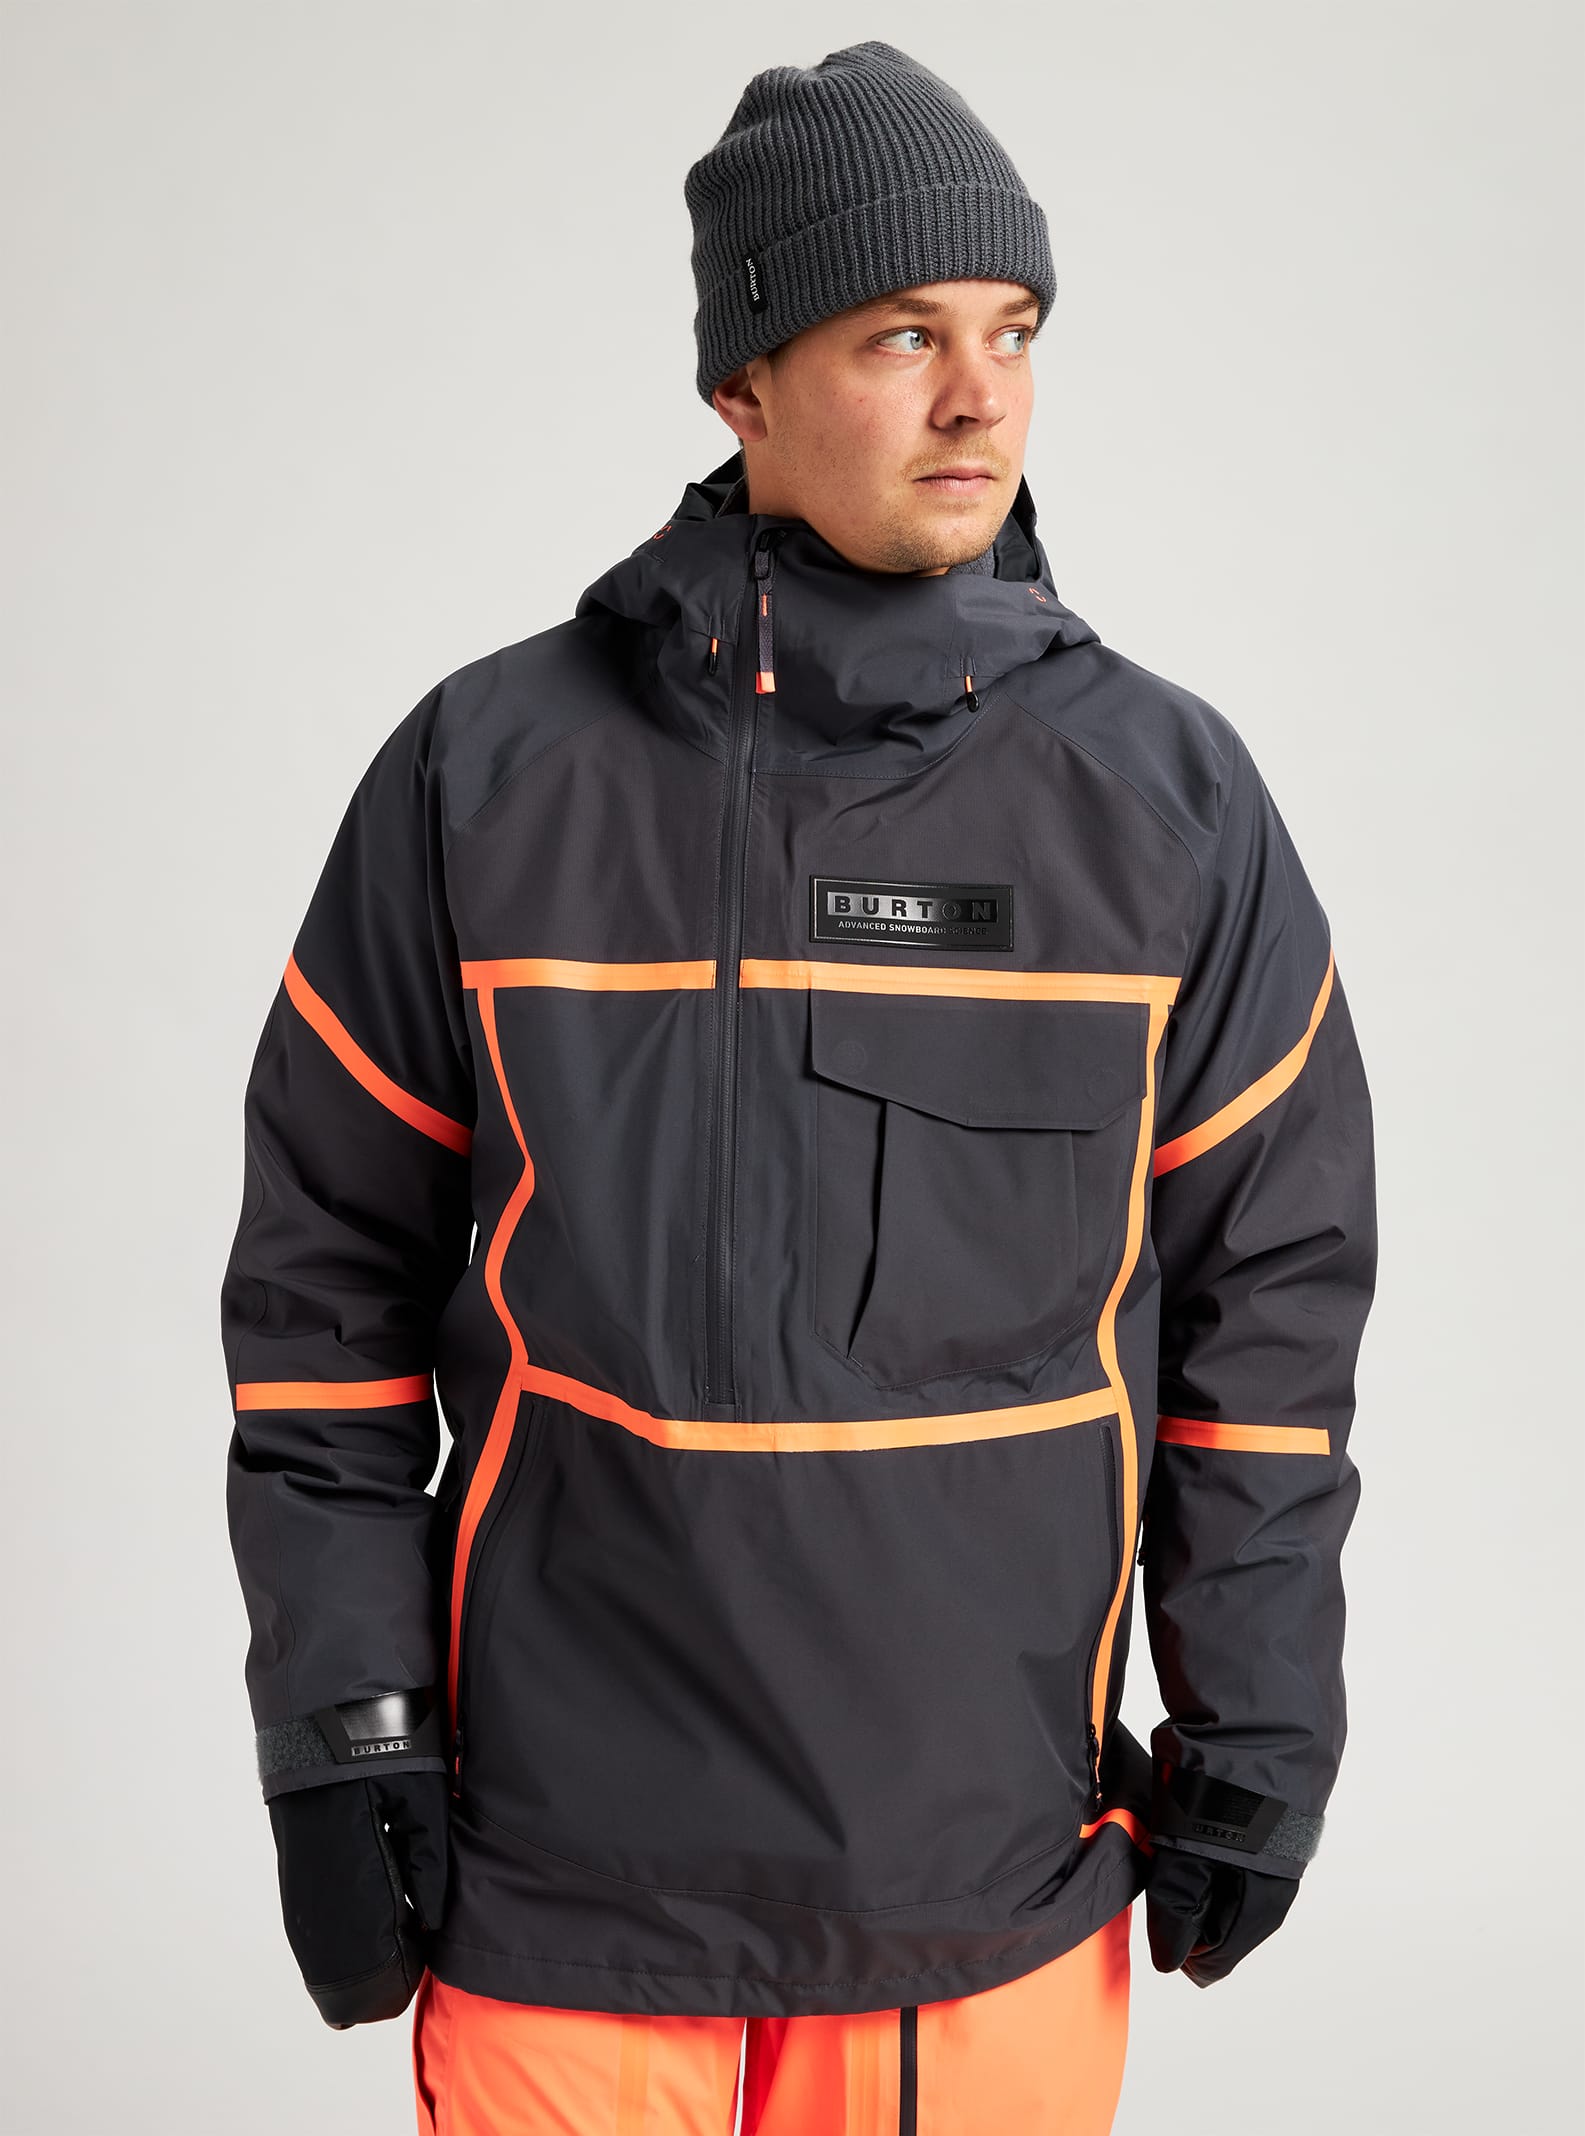 Men's Burton GORE-TEX 2L Breaker Anorak Jacket | Burton.com Winter 